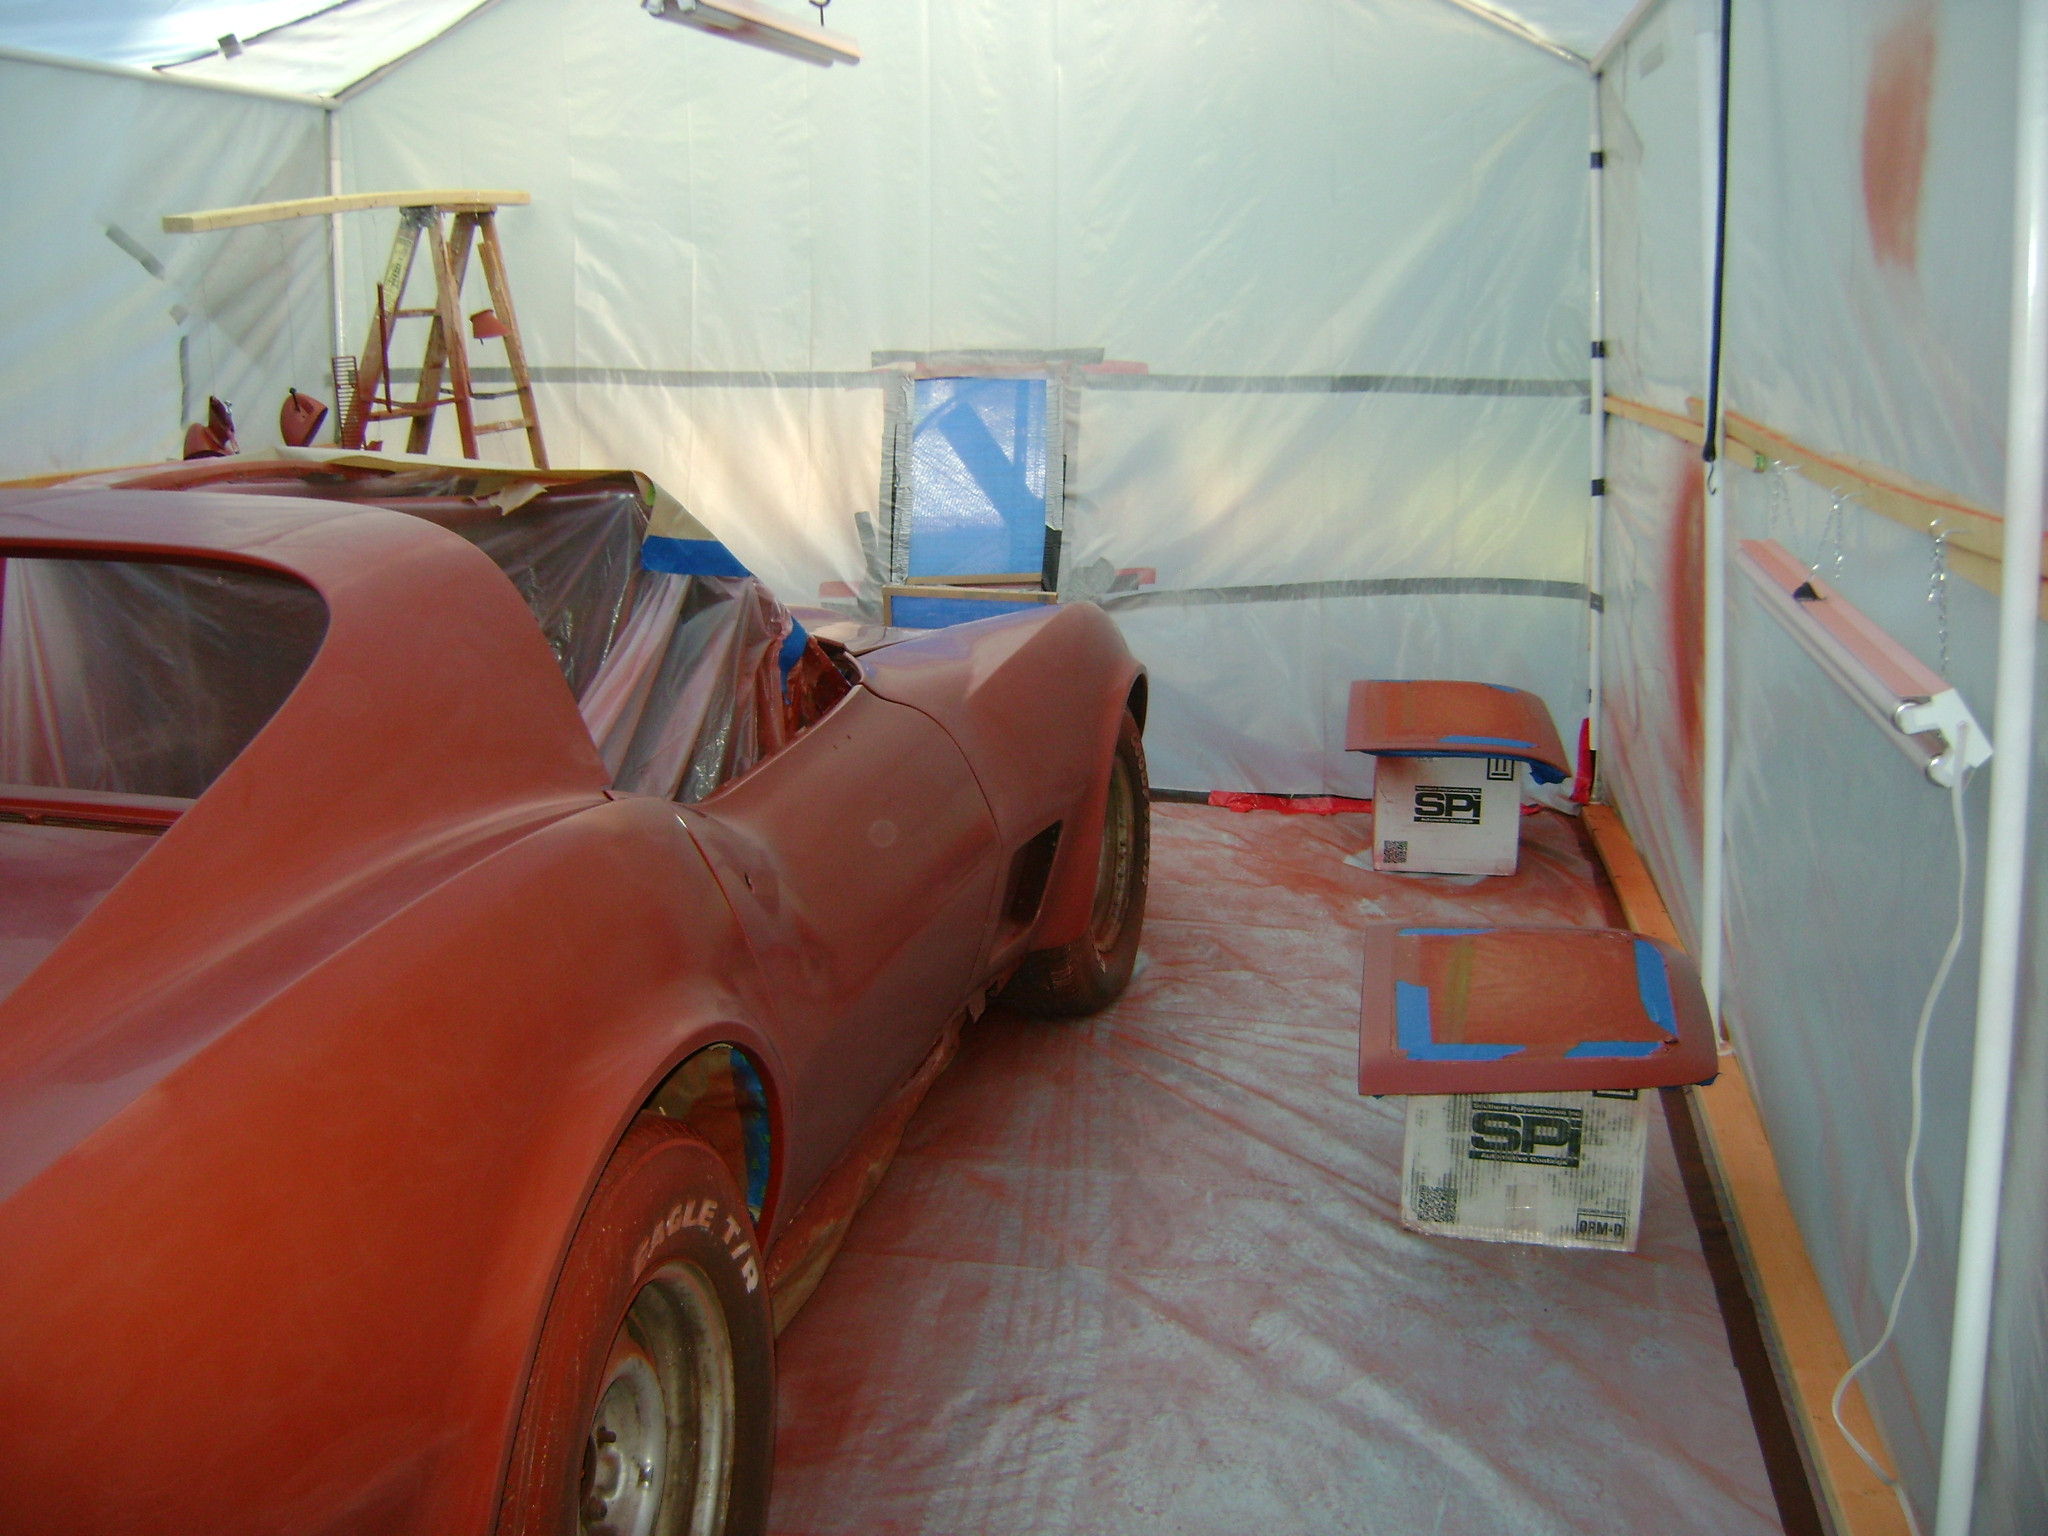 Best ideas about DIY Car Paint Booth
. Save or Pin My DIY paint booth CorvetteForum Chevrolet Corvette Now.